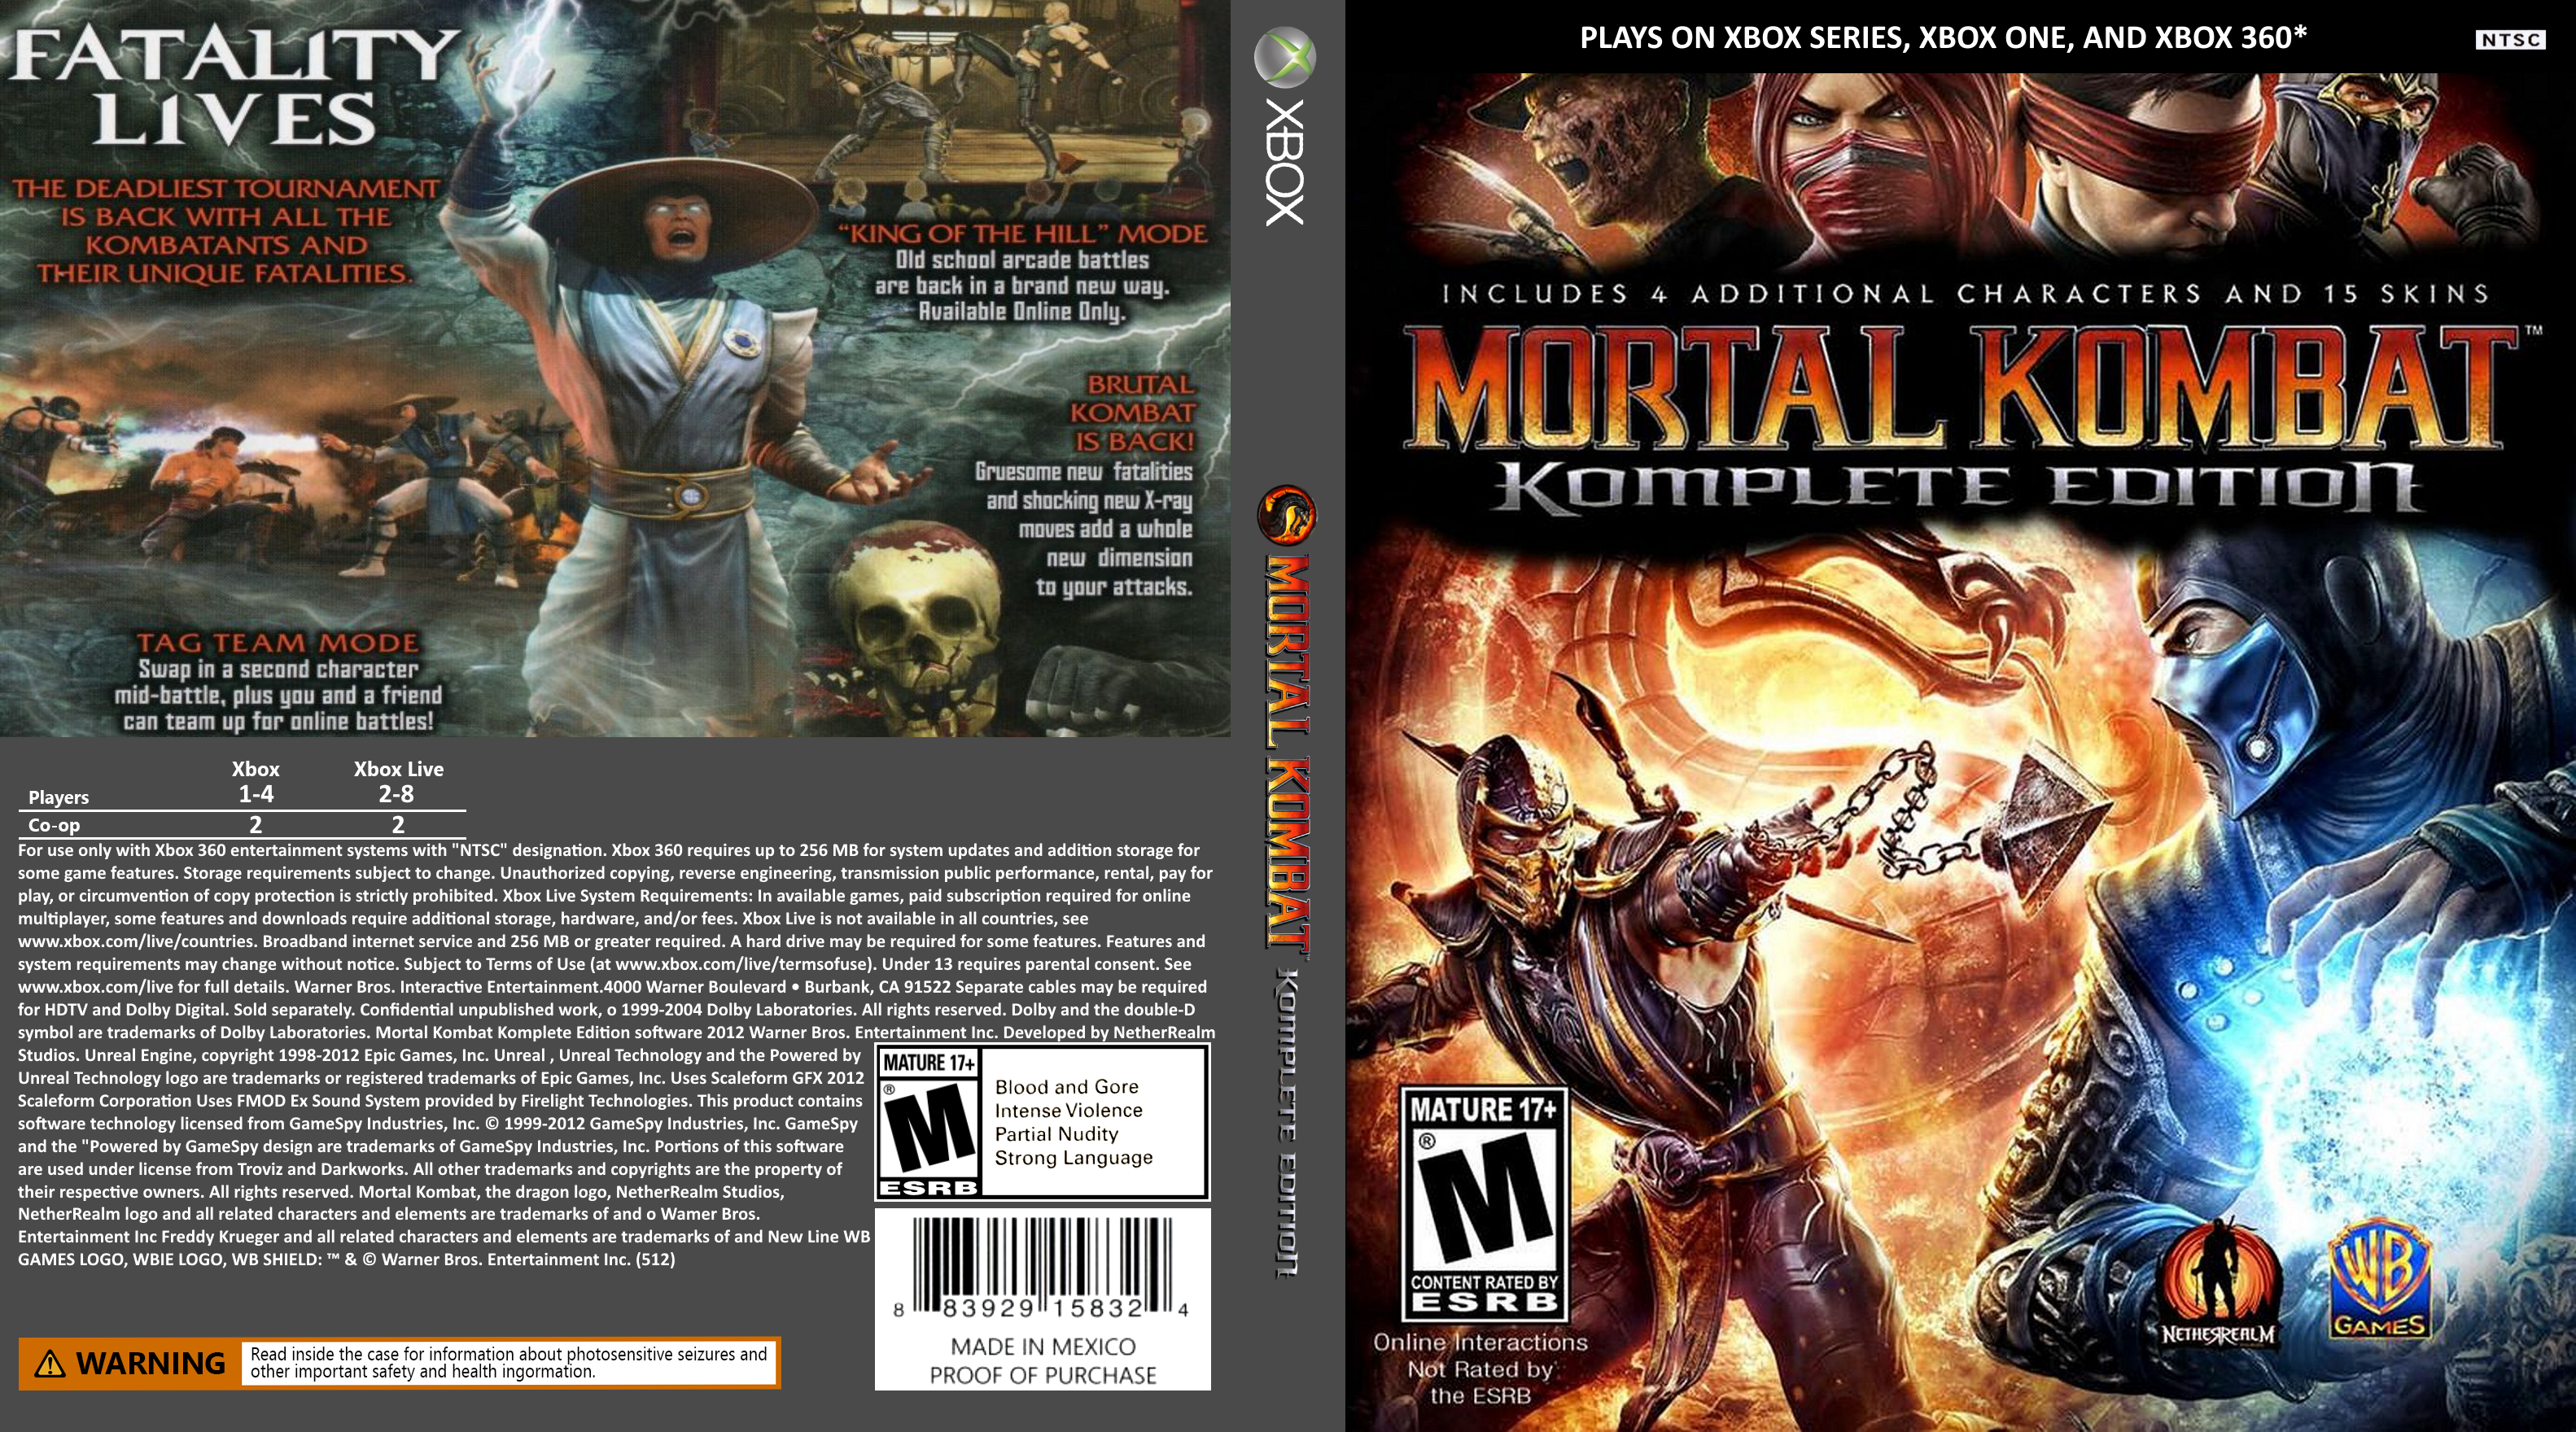 Mortal Kombat (9) Komplete Edition by SnowCoveredPlains on DeviantArt